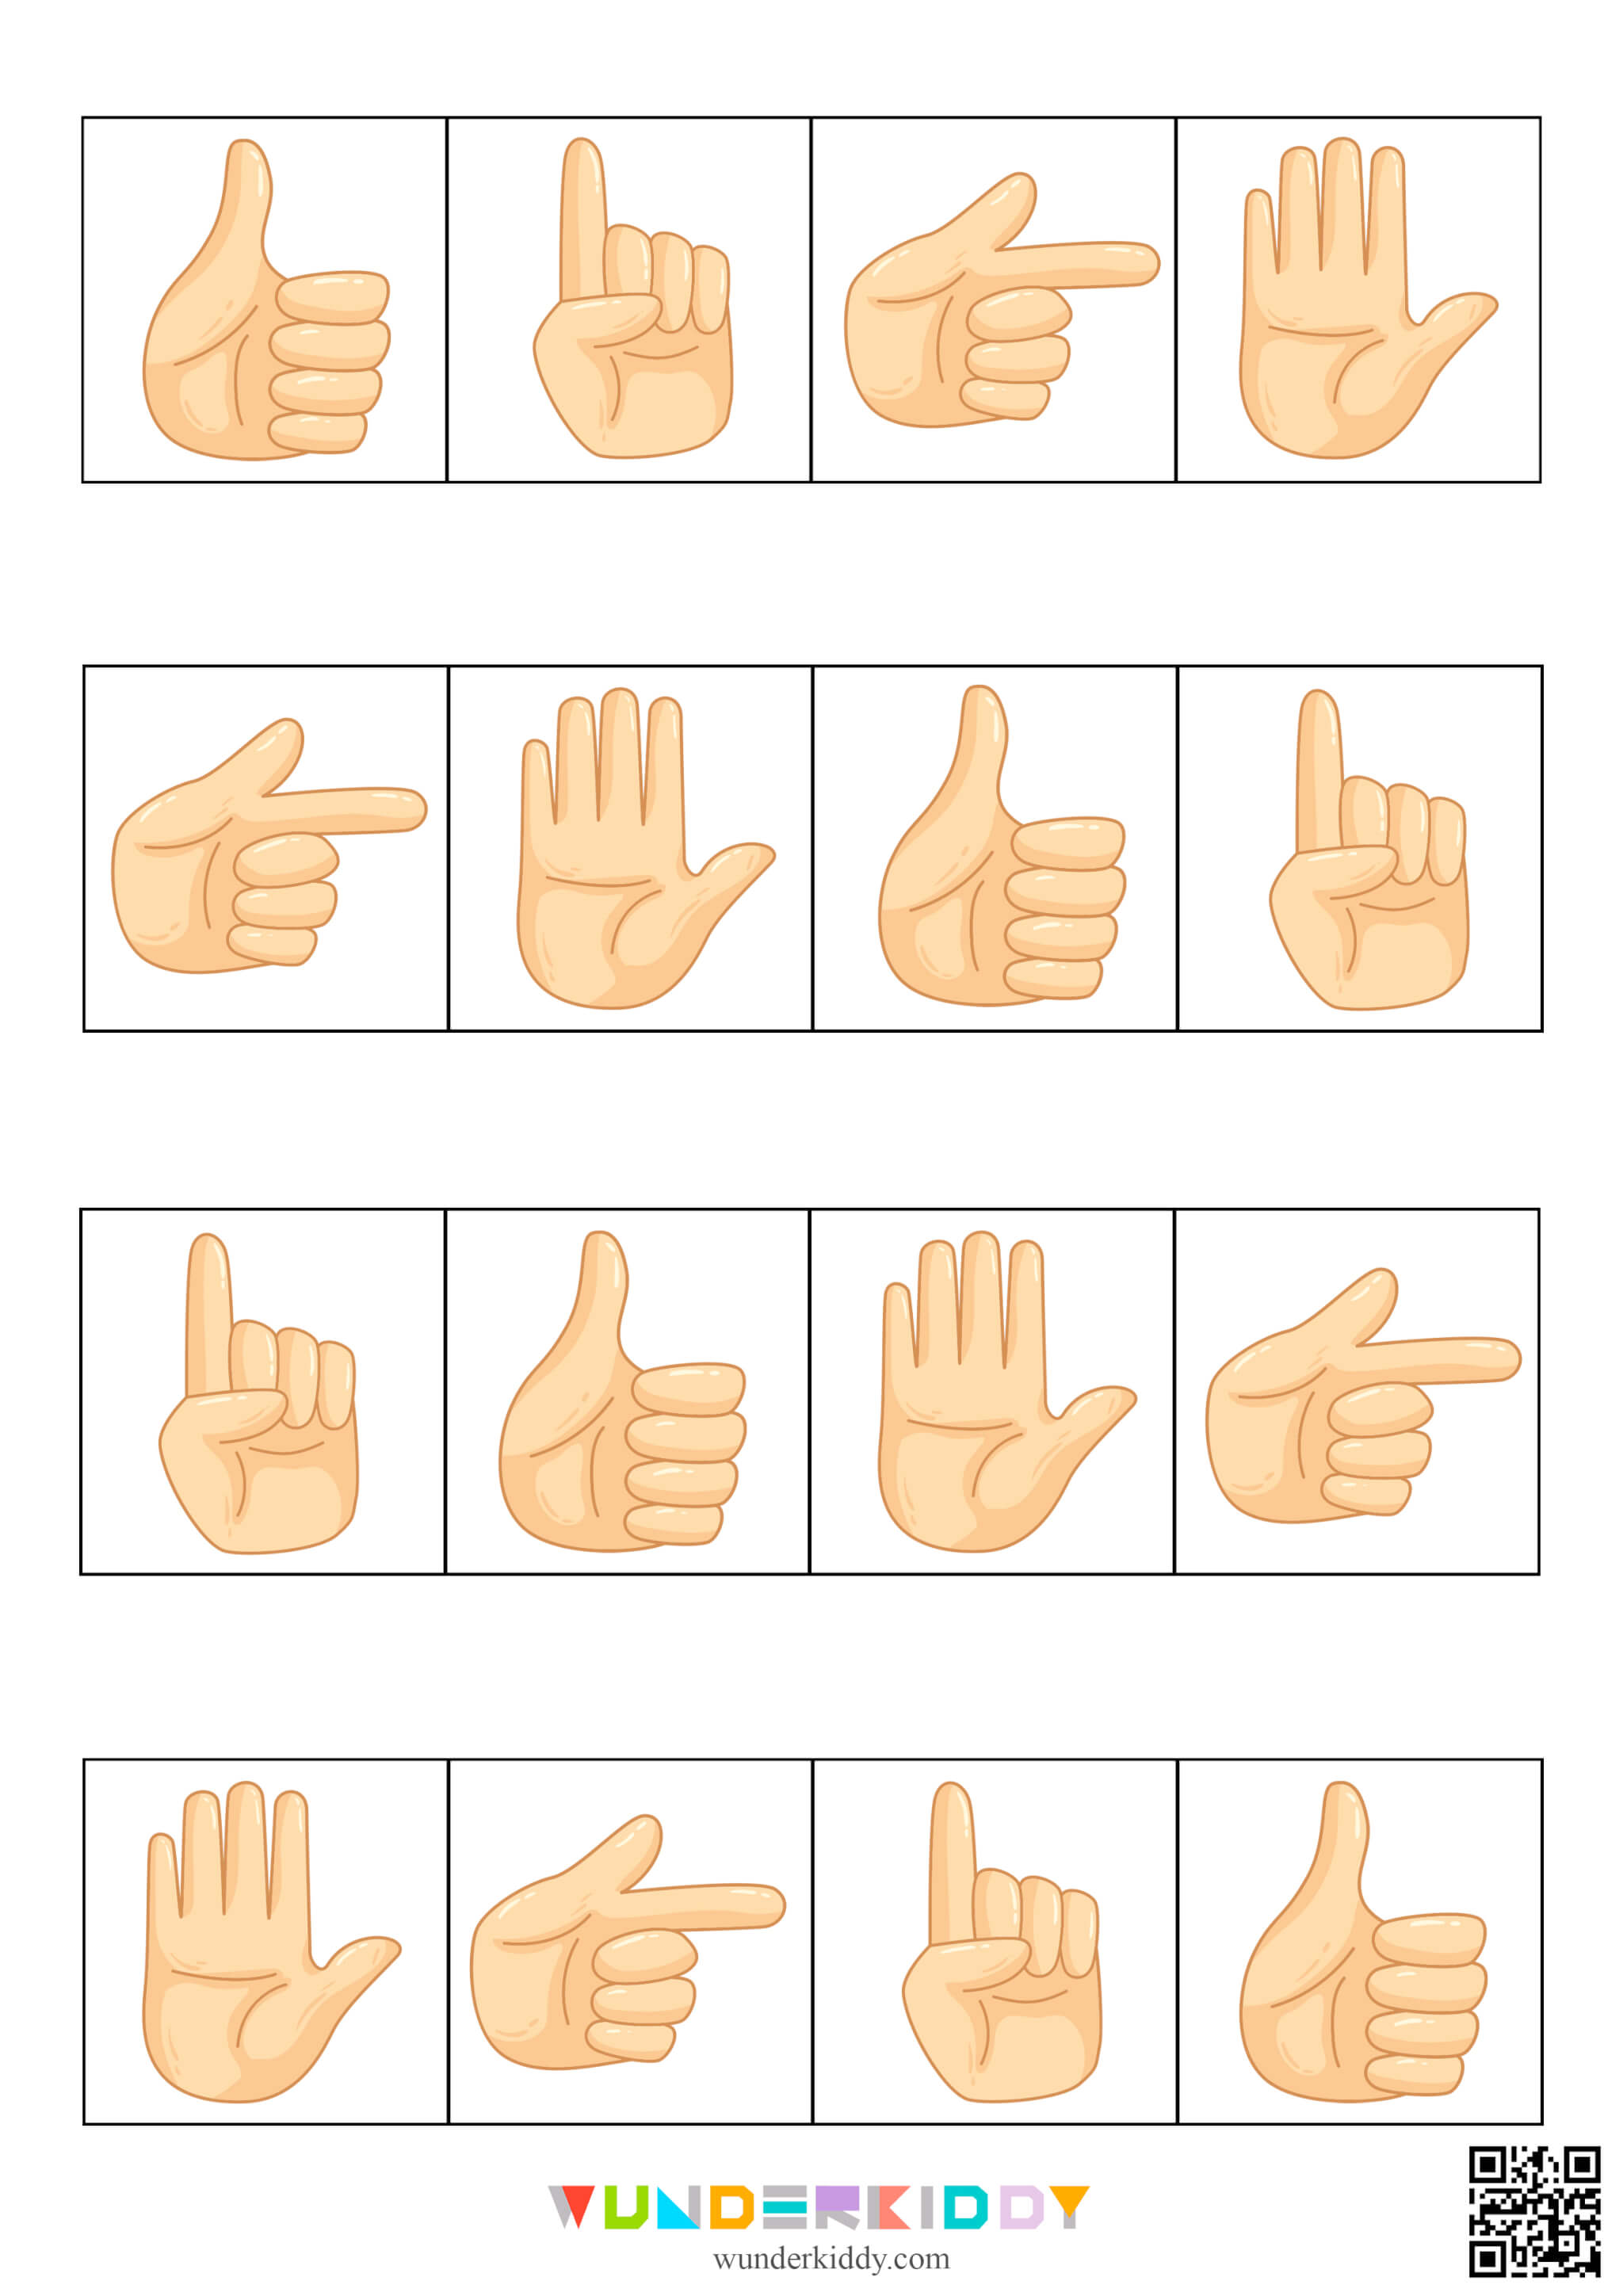 Finger Gestures Activity - Image 2